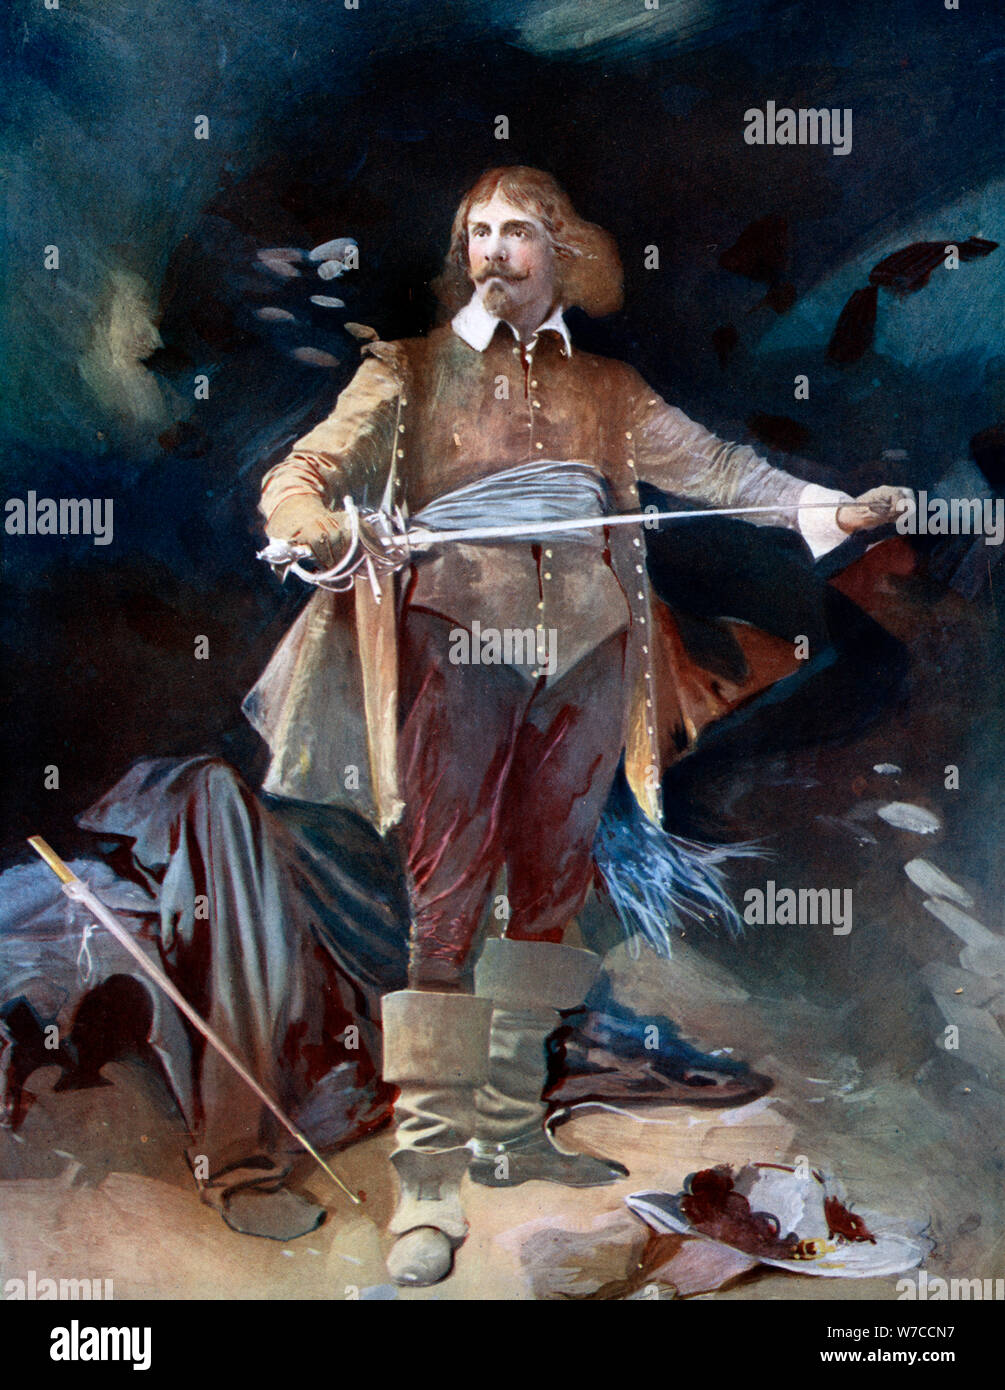 Herbert Waring sotto il mantello rosso, c1902.Artista: ELLIS & Walery Foto Stock